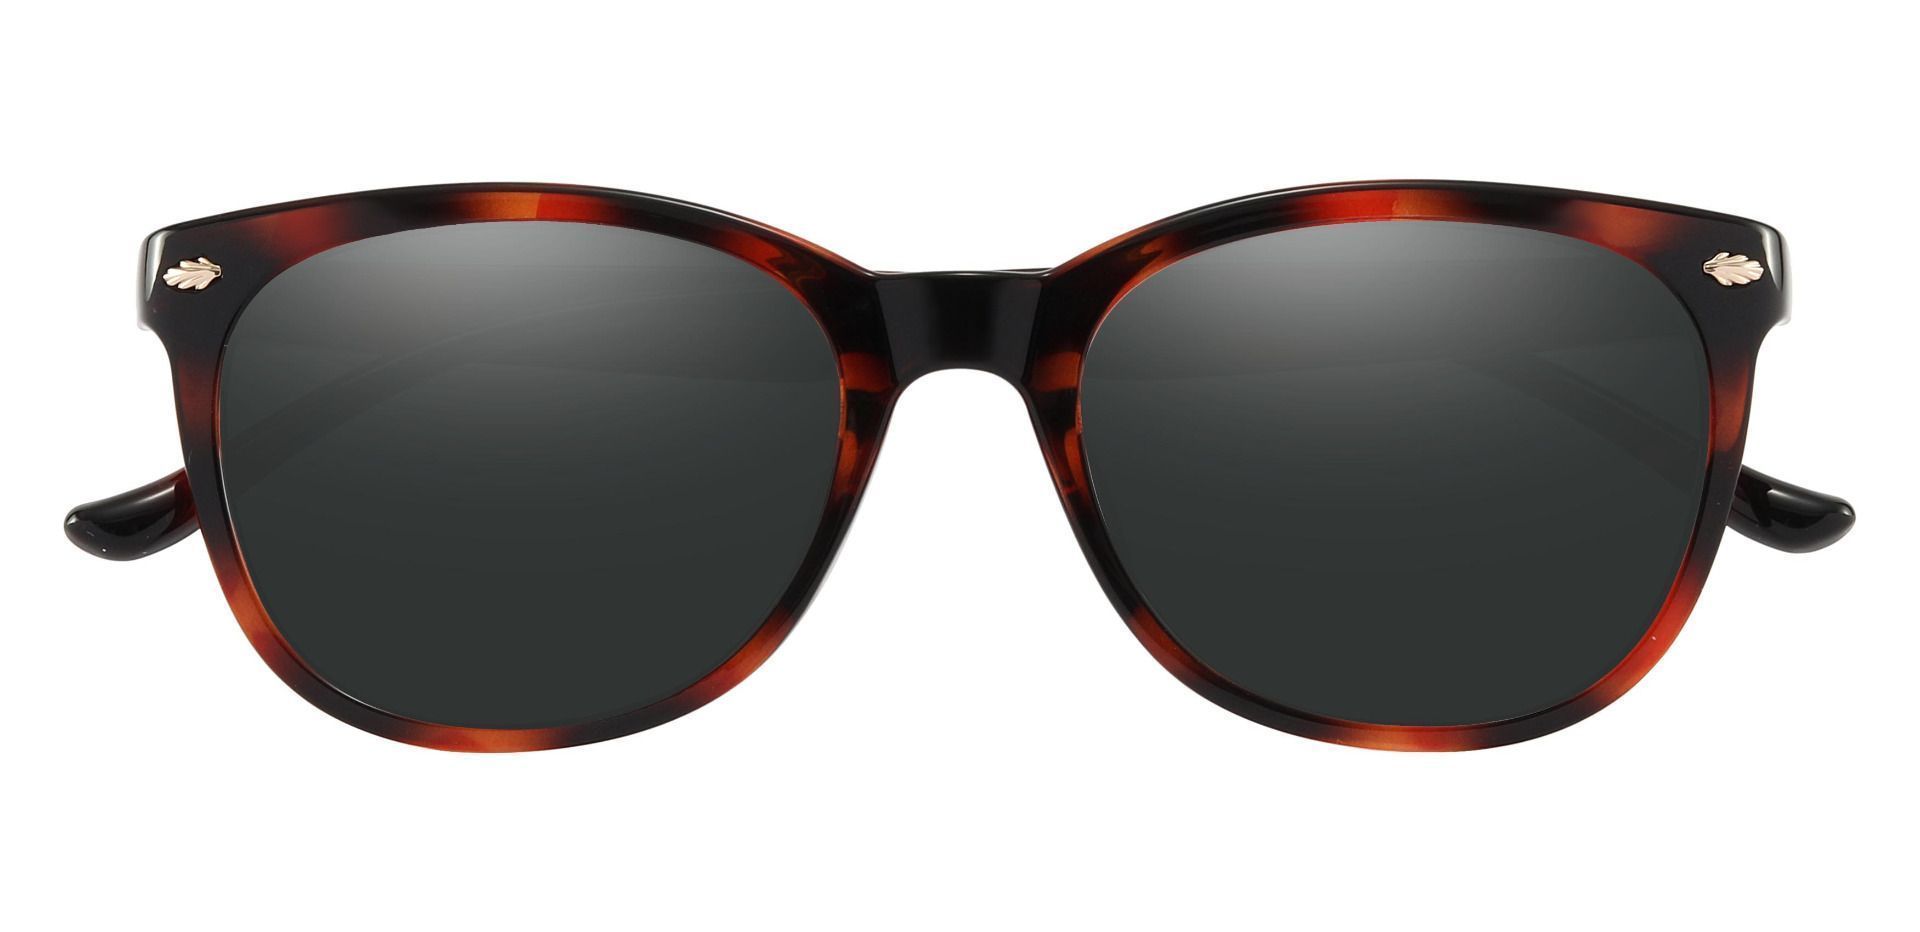 Pavilion Square Non-Rx Sunglasses - Tortoise Frame With Gray Lenses